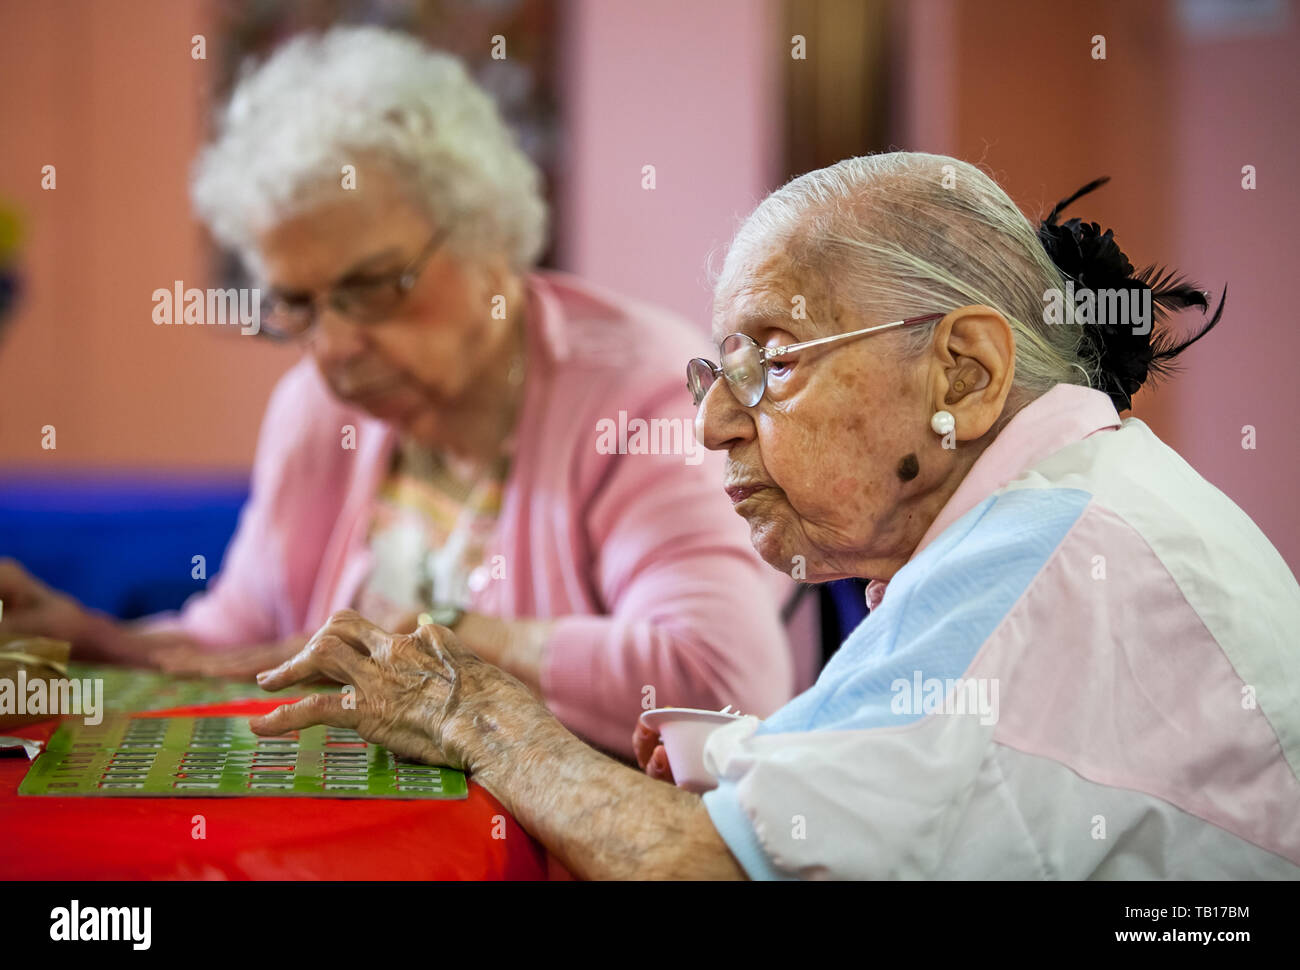 2 senior women at a senior center in Ardmore PA  playing bingo Stock Photo